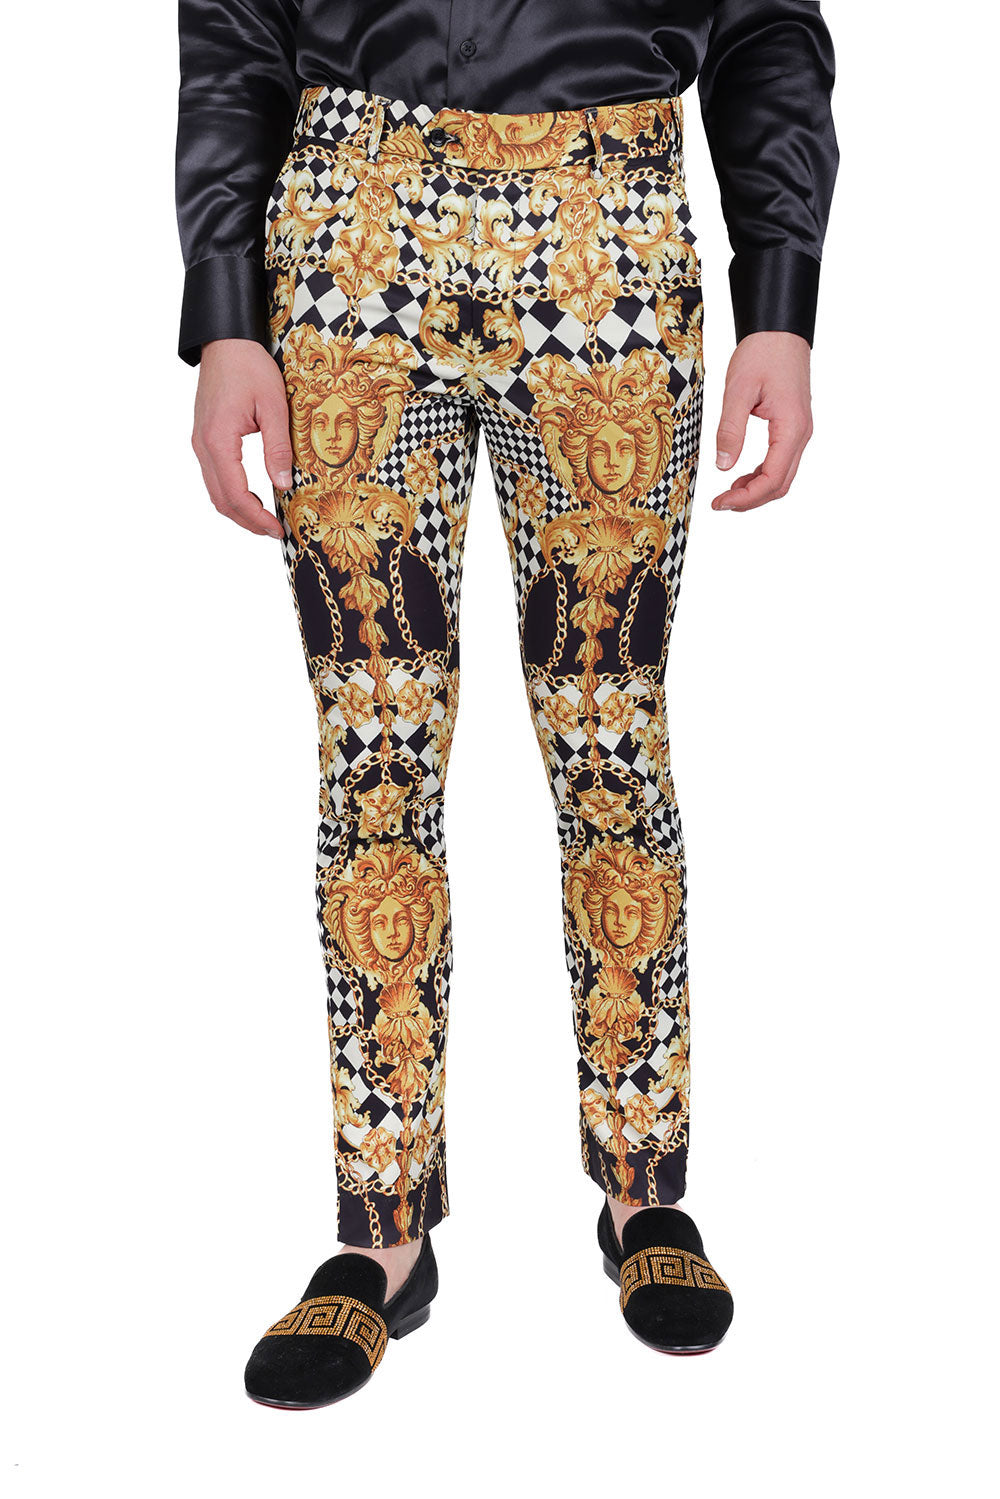 BARABAS Men's Printed Gold Chain Checkered Medusa Floral Pants CP178 Black Gold